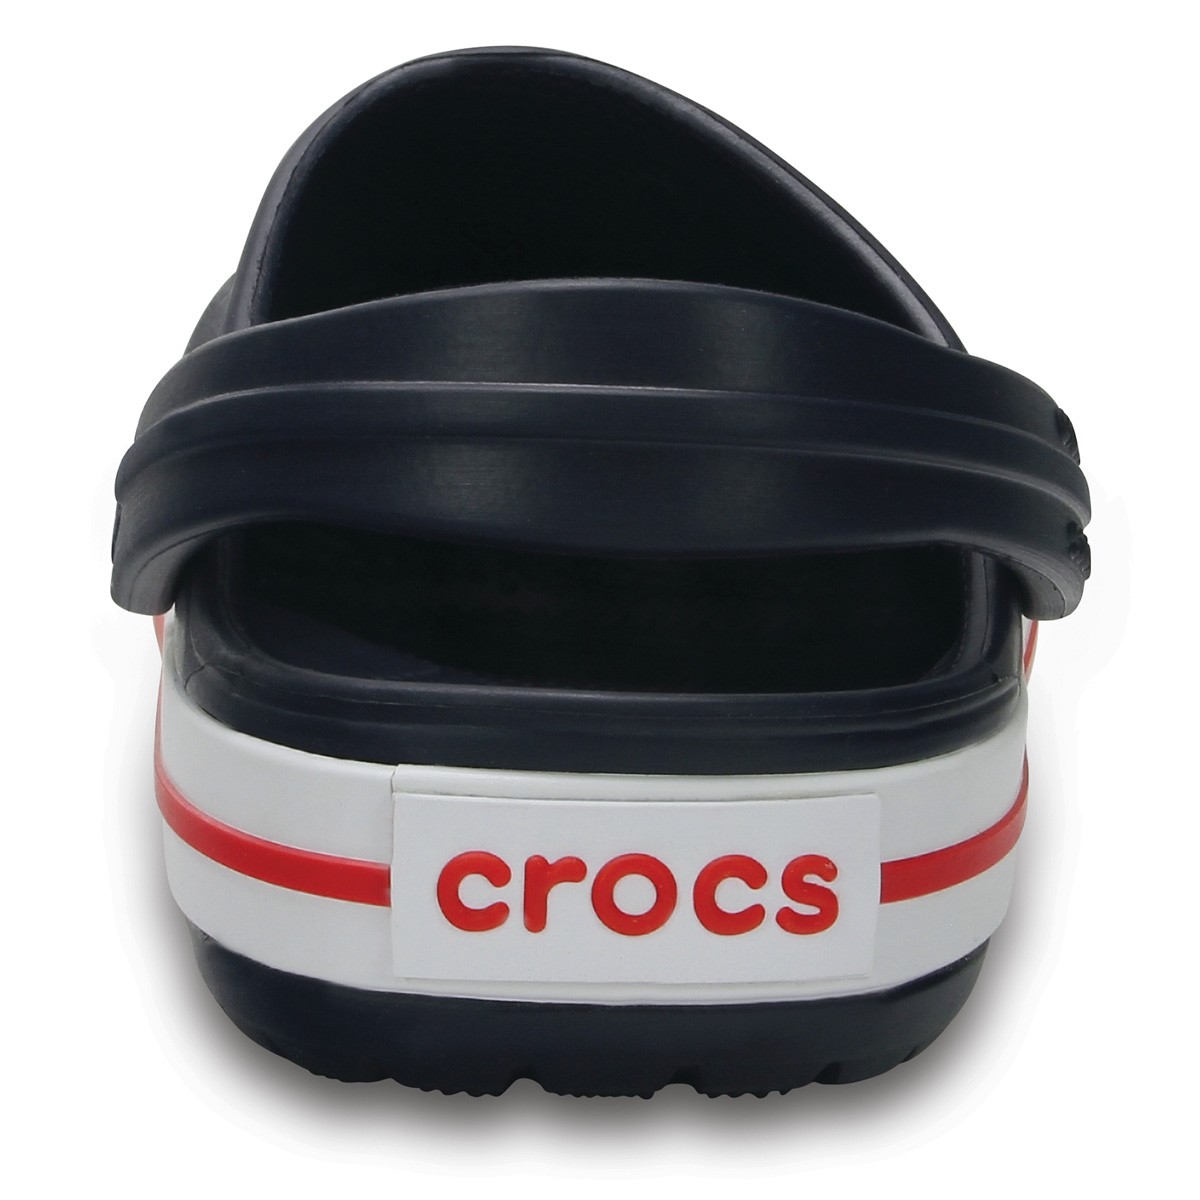 Crocs Sandalet 204537 Navy/Red